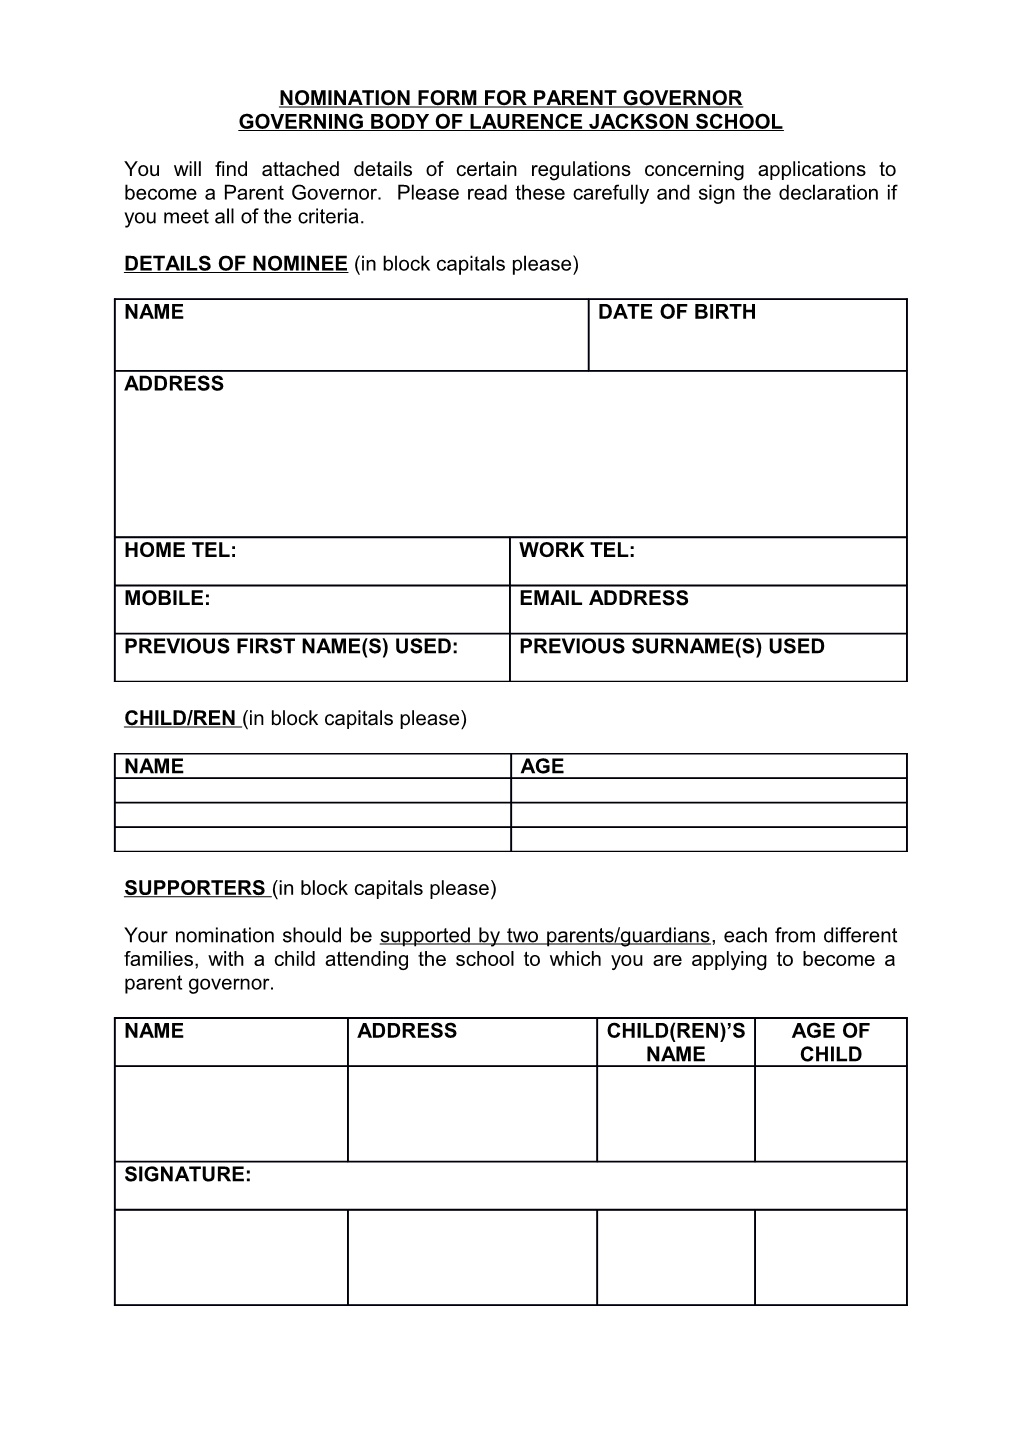 Nomination Form for Parent Governor